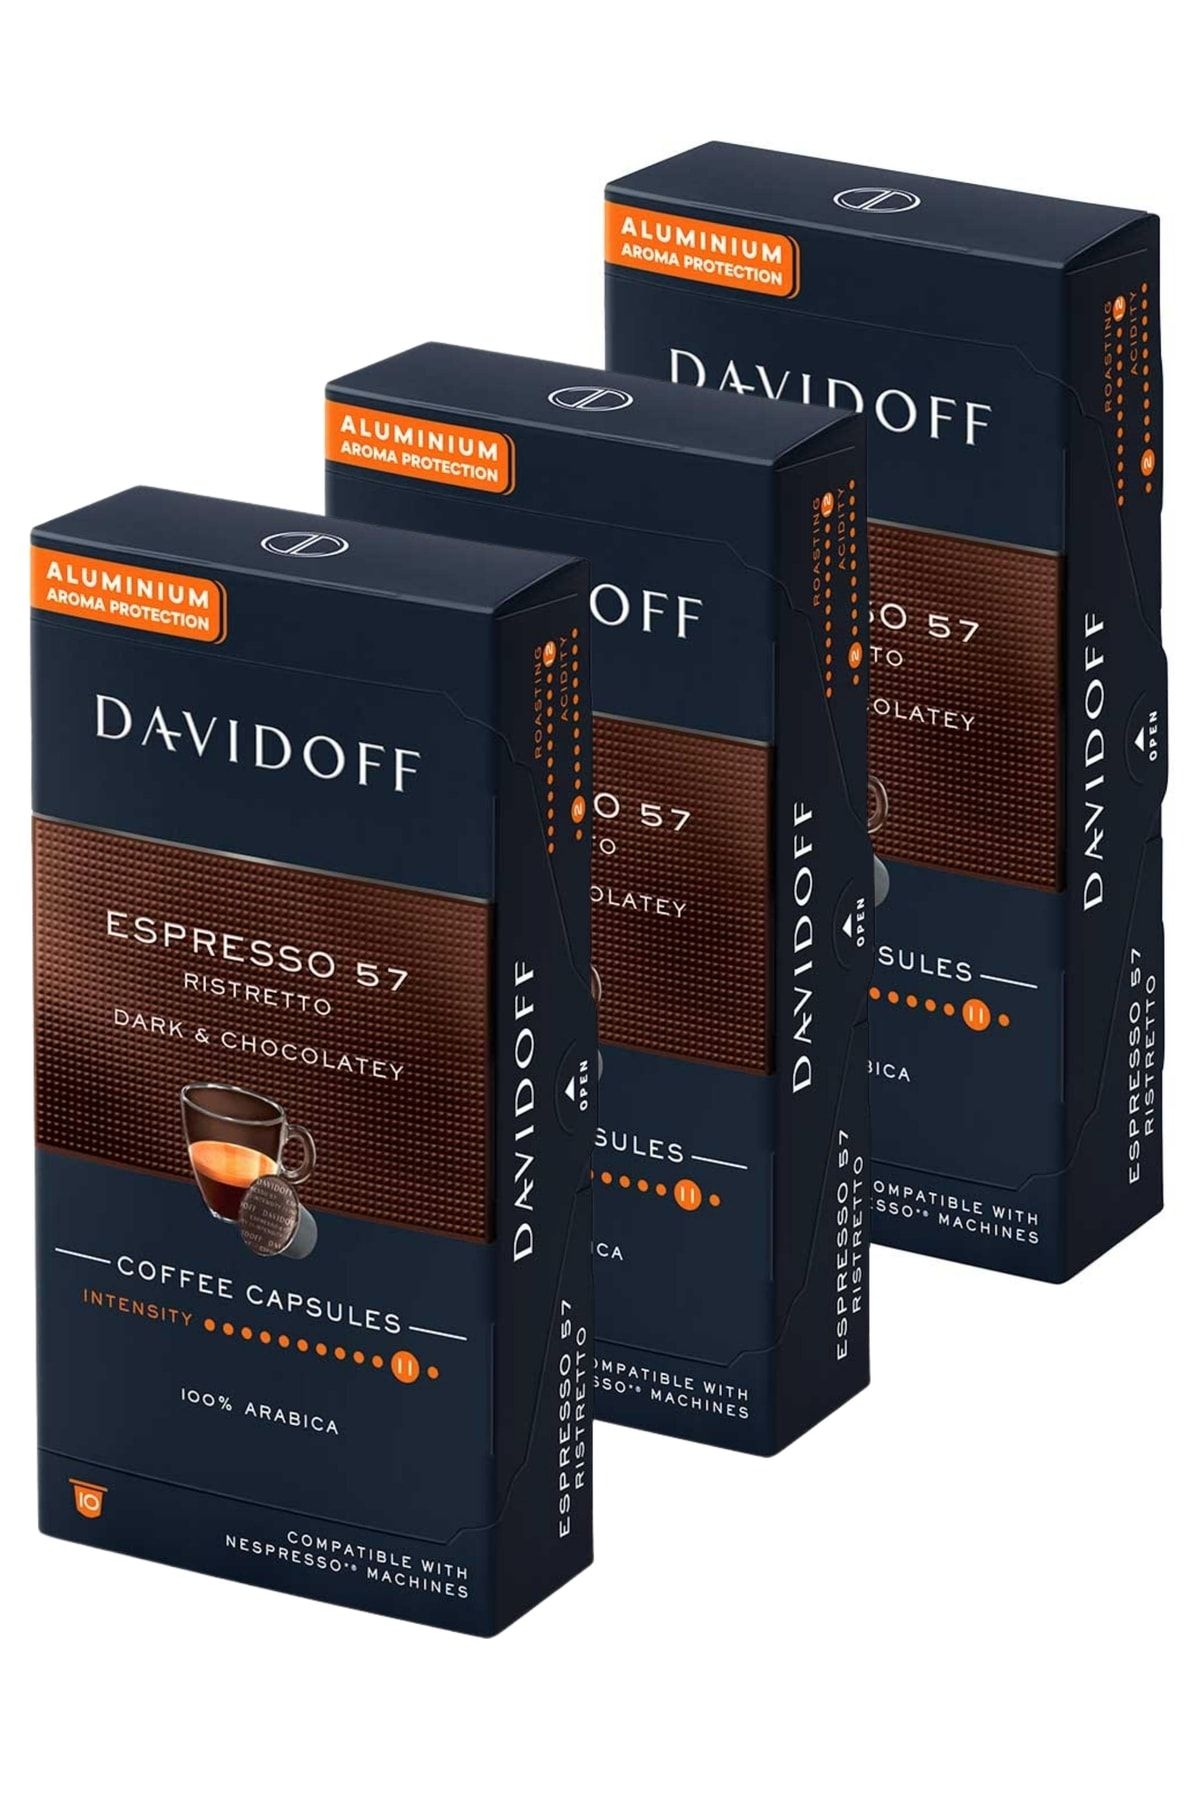 Davidoff Espresso 57 Rıstretto Dark & Chocolatey Aluminium Kapsül Kahve 3x10'lu (nespresso Uyumlu)